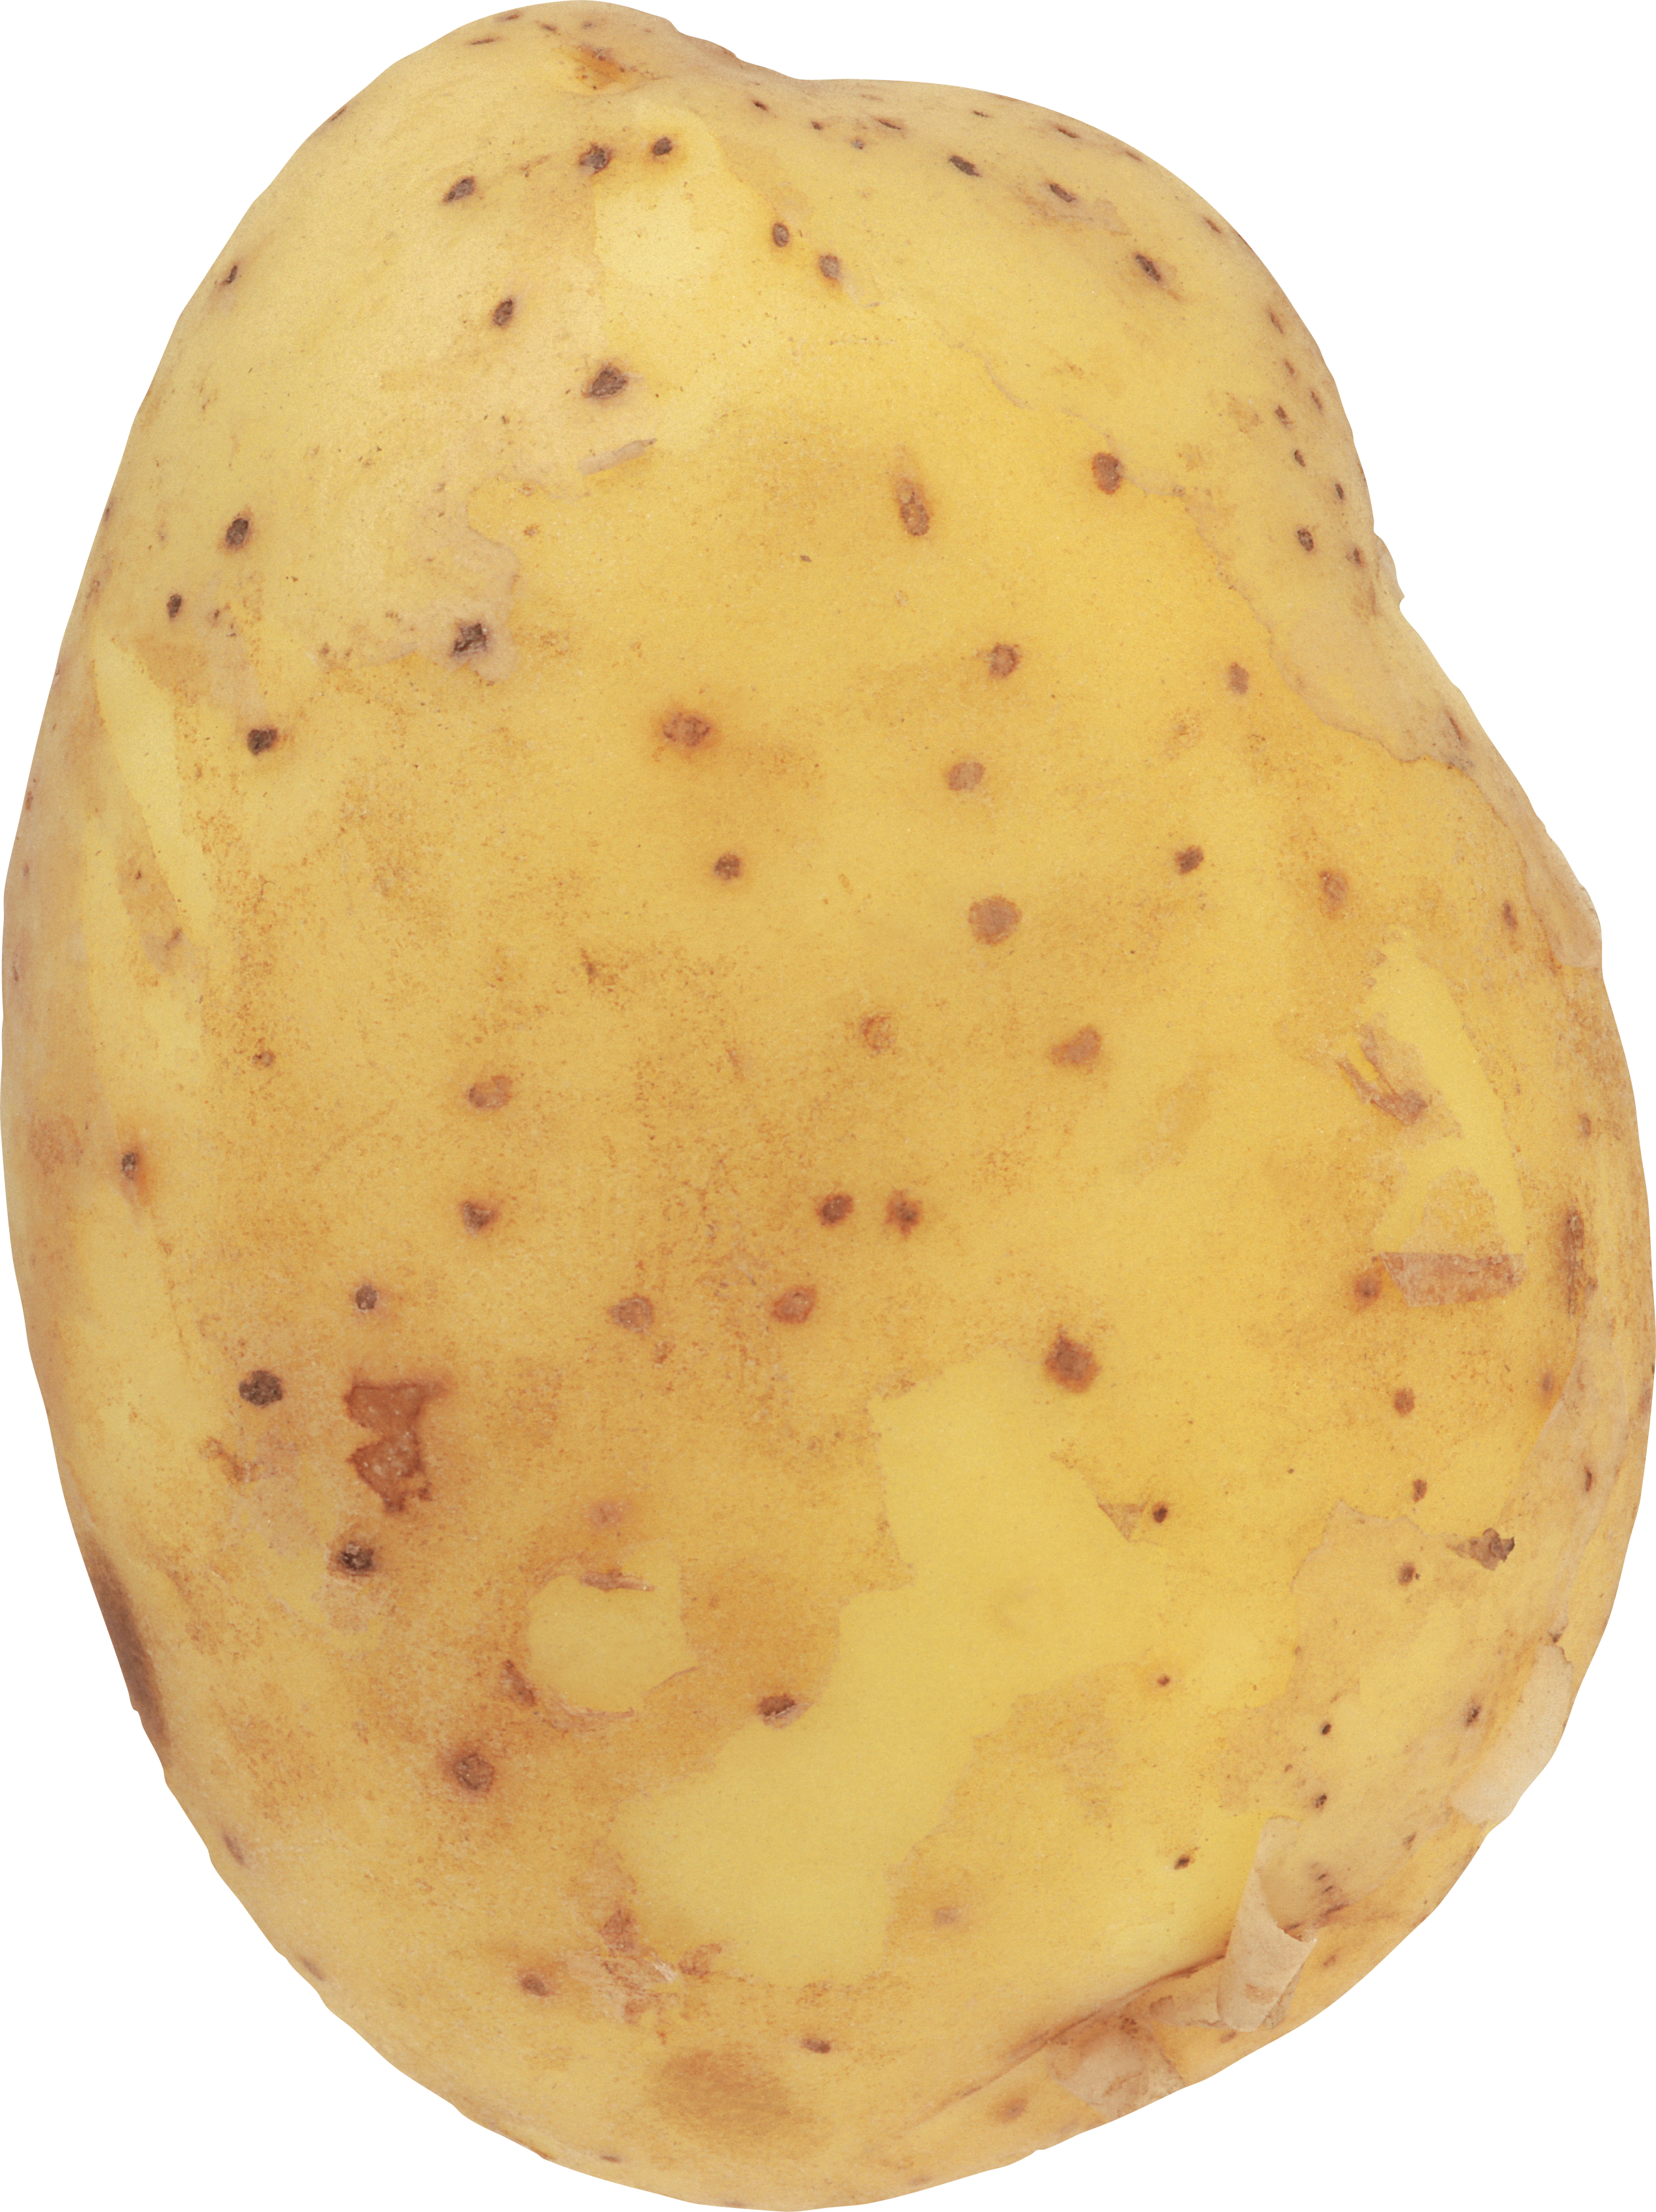 PNG File Name: Potato PlusPng